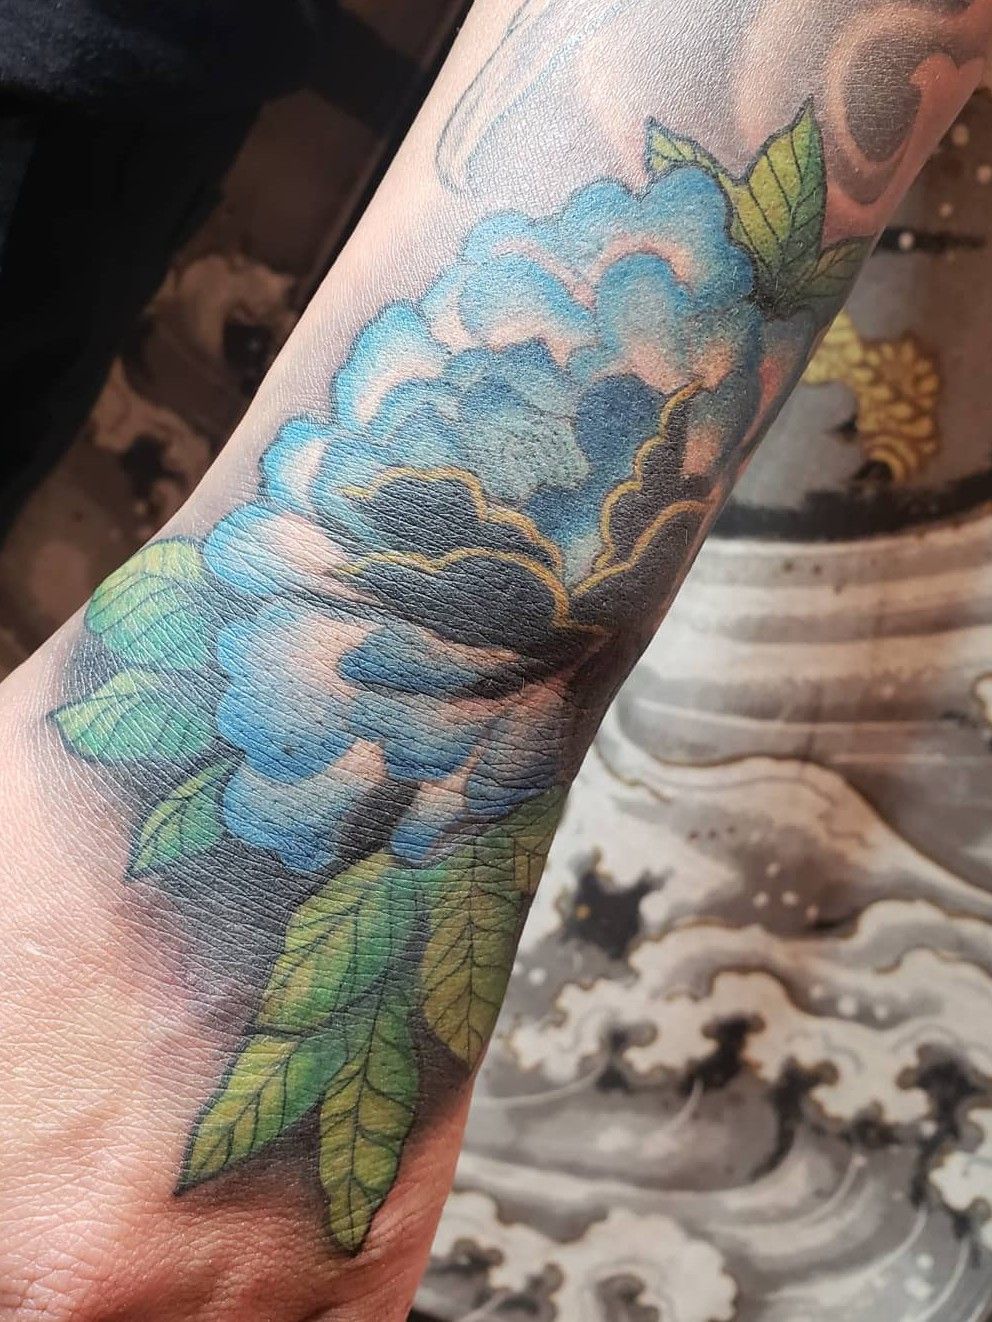 Underarm Peony Flower Tattoo by me Adam Sky Morningstar Tattoo Parlor  Belmont California  rtattoos